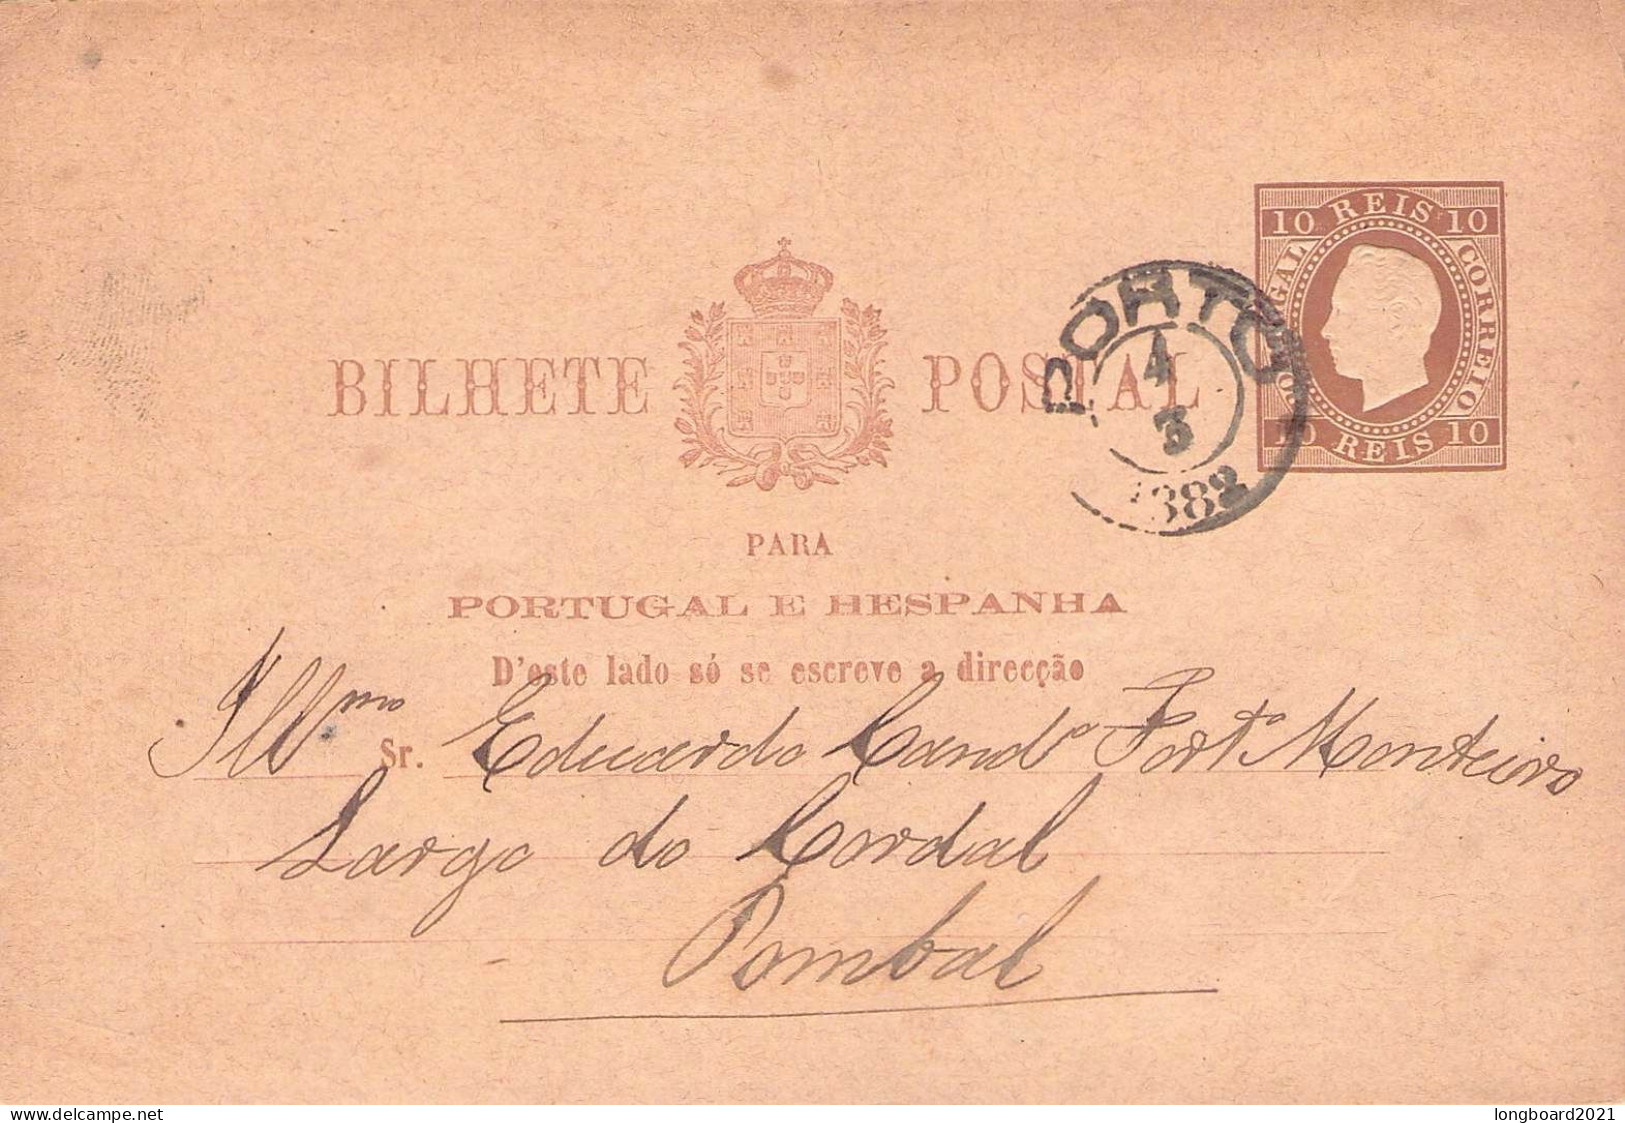 PORTUGAL - BILHETE POSTAL 10 REIS (1882) Mi P7 / *1007 - Postal Stationery